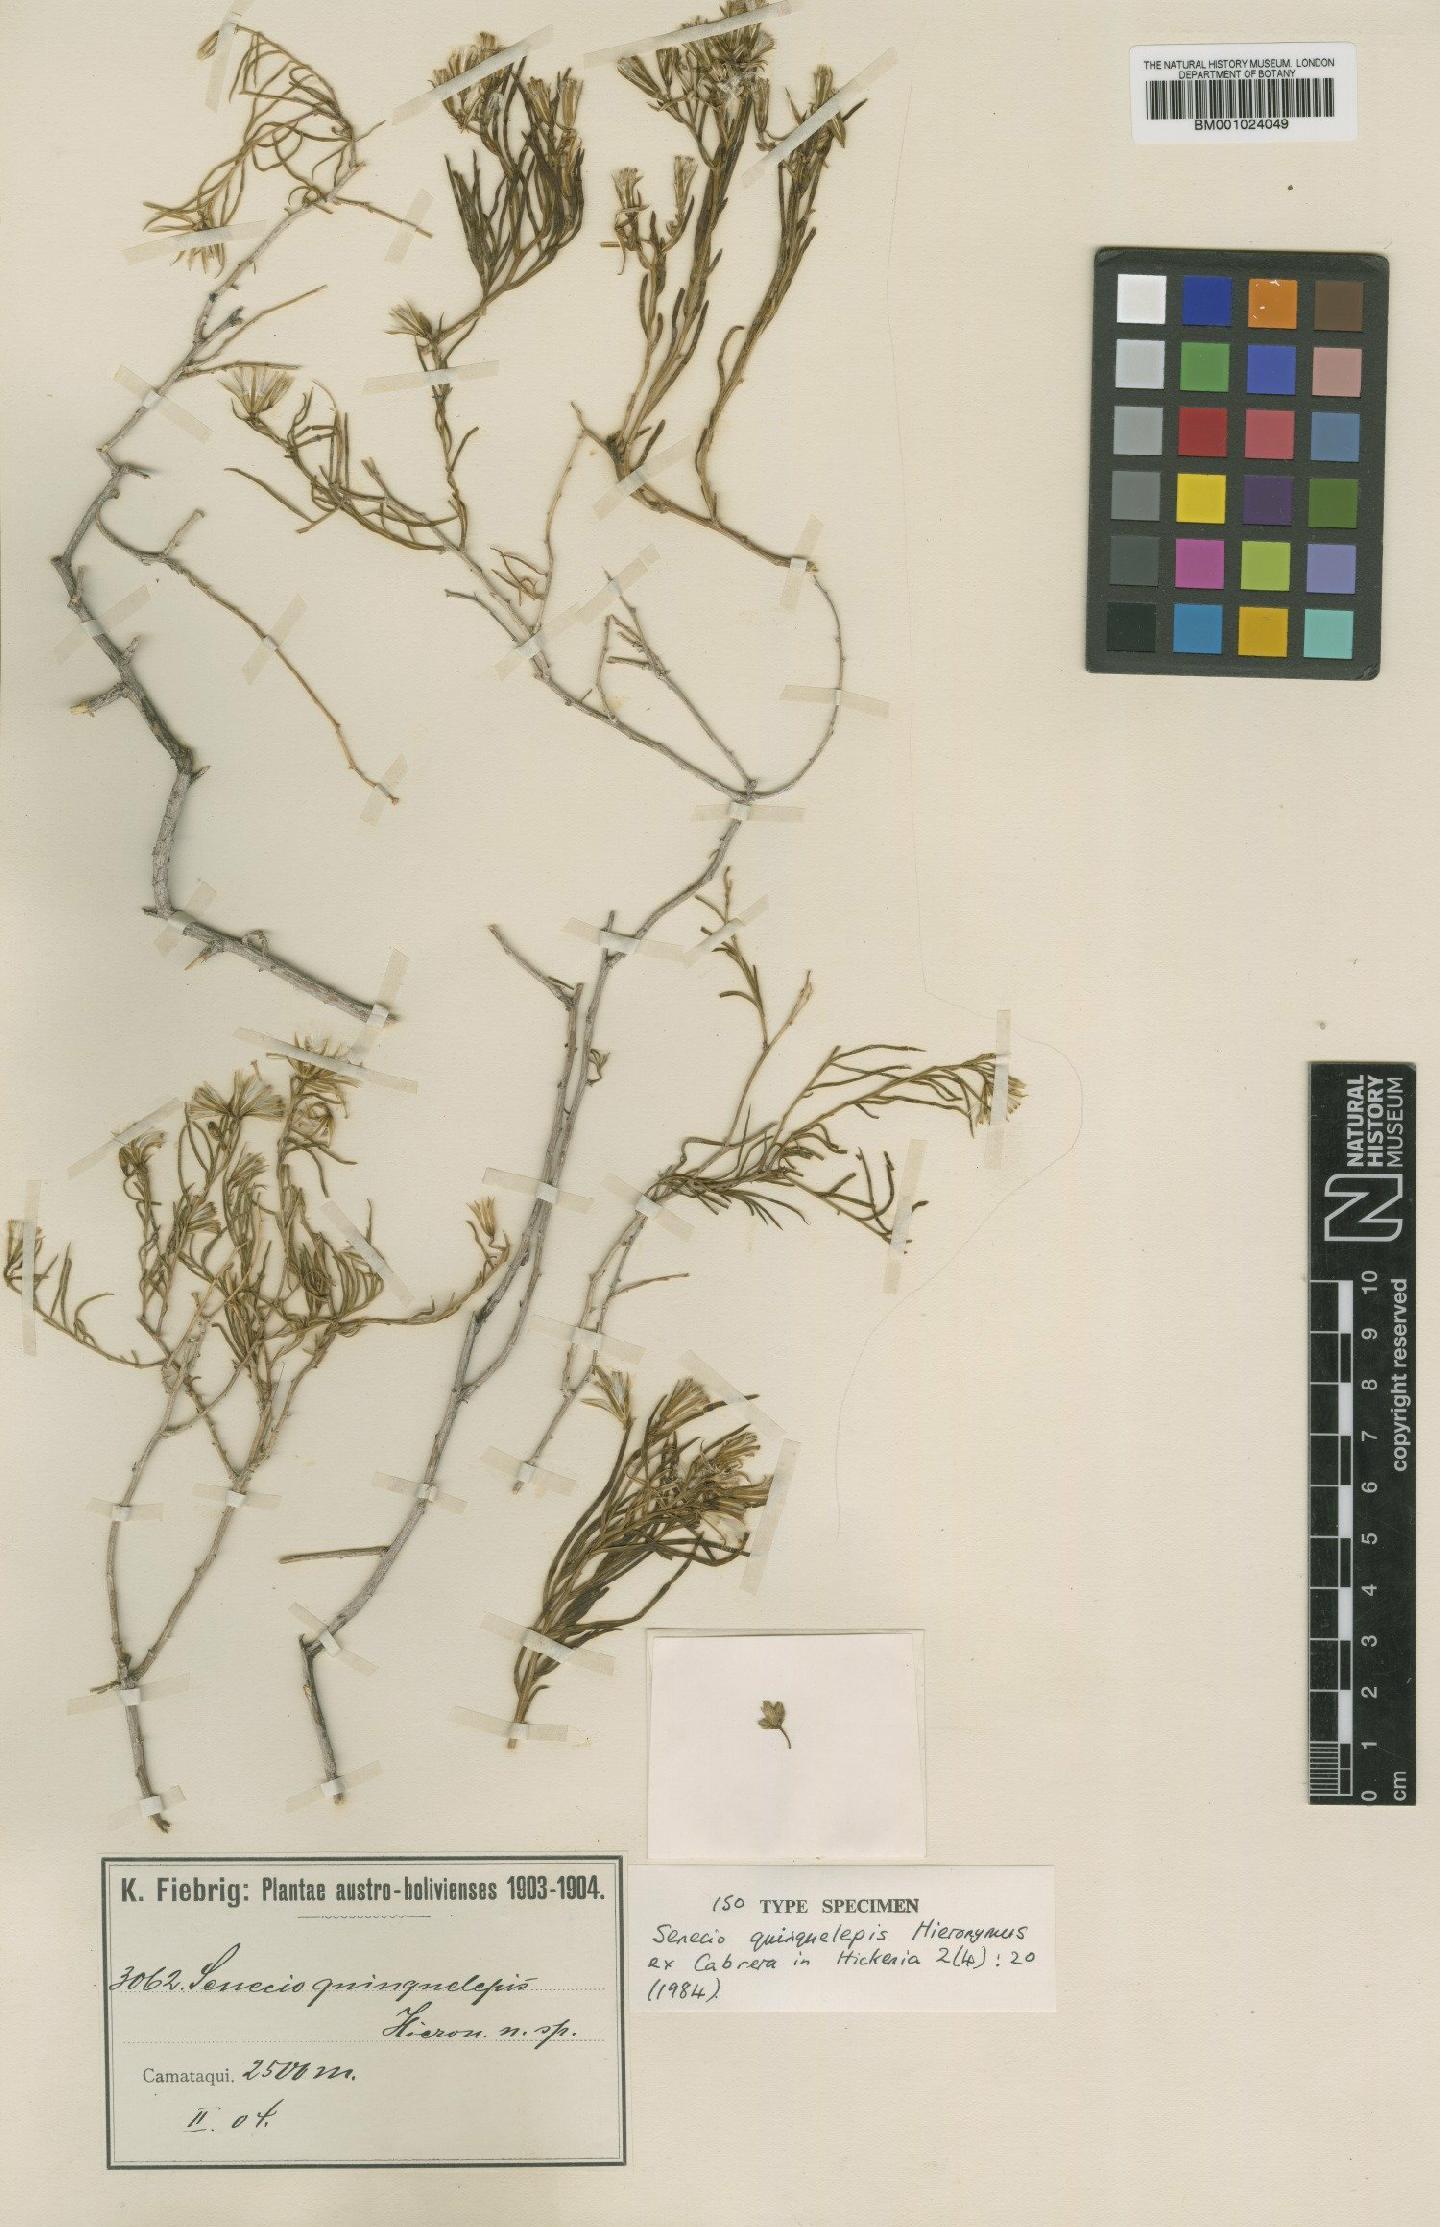 To NHMUK collection (Senecio quinquelepis Hieron. ex Cabrera; Isotype; NHMUK:ecatalogue:622445)